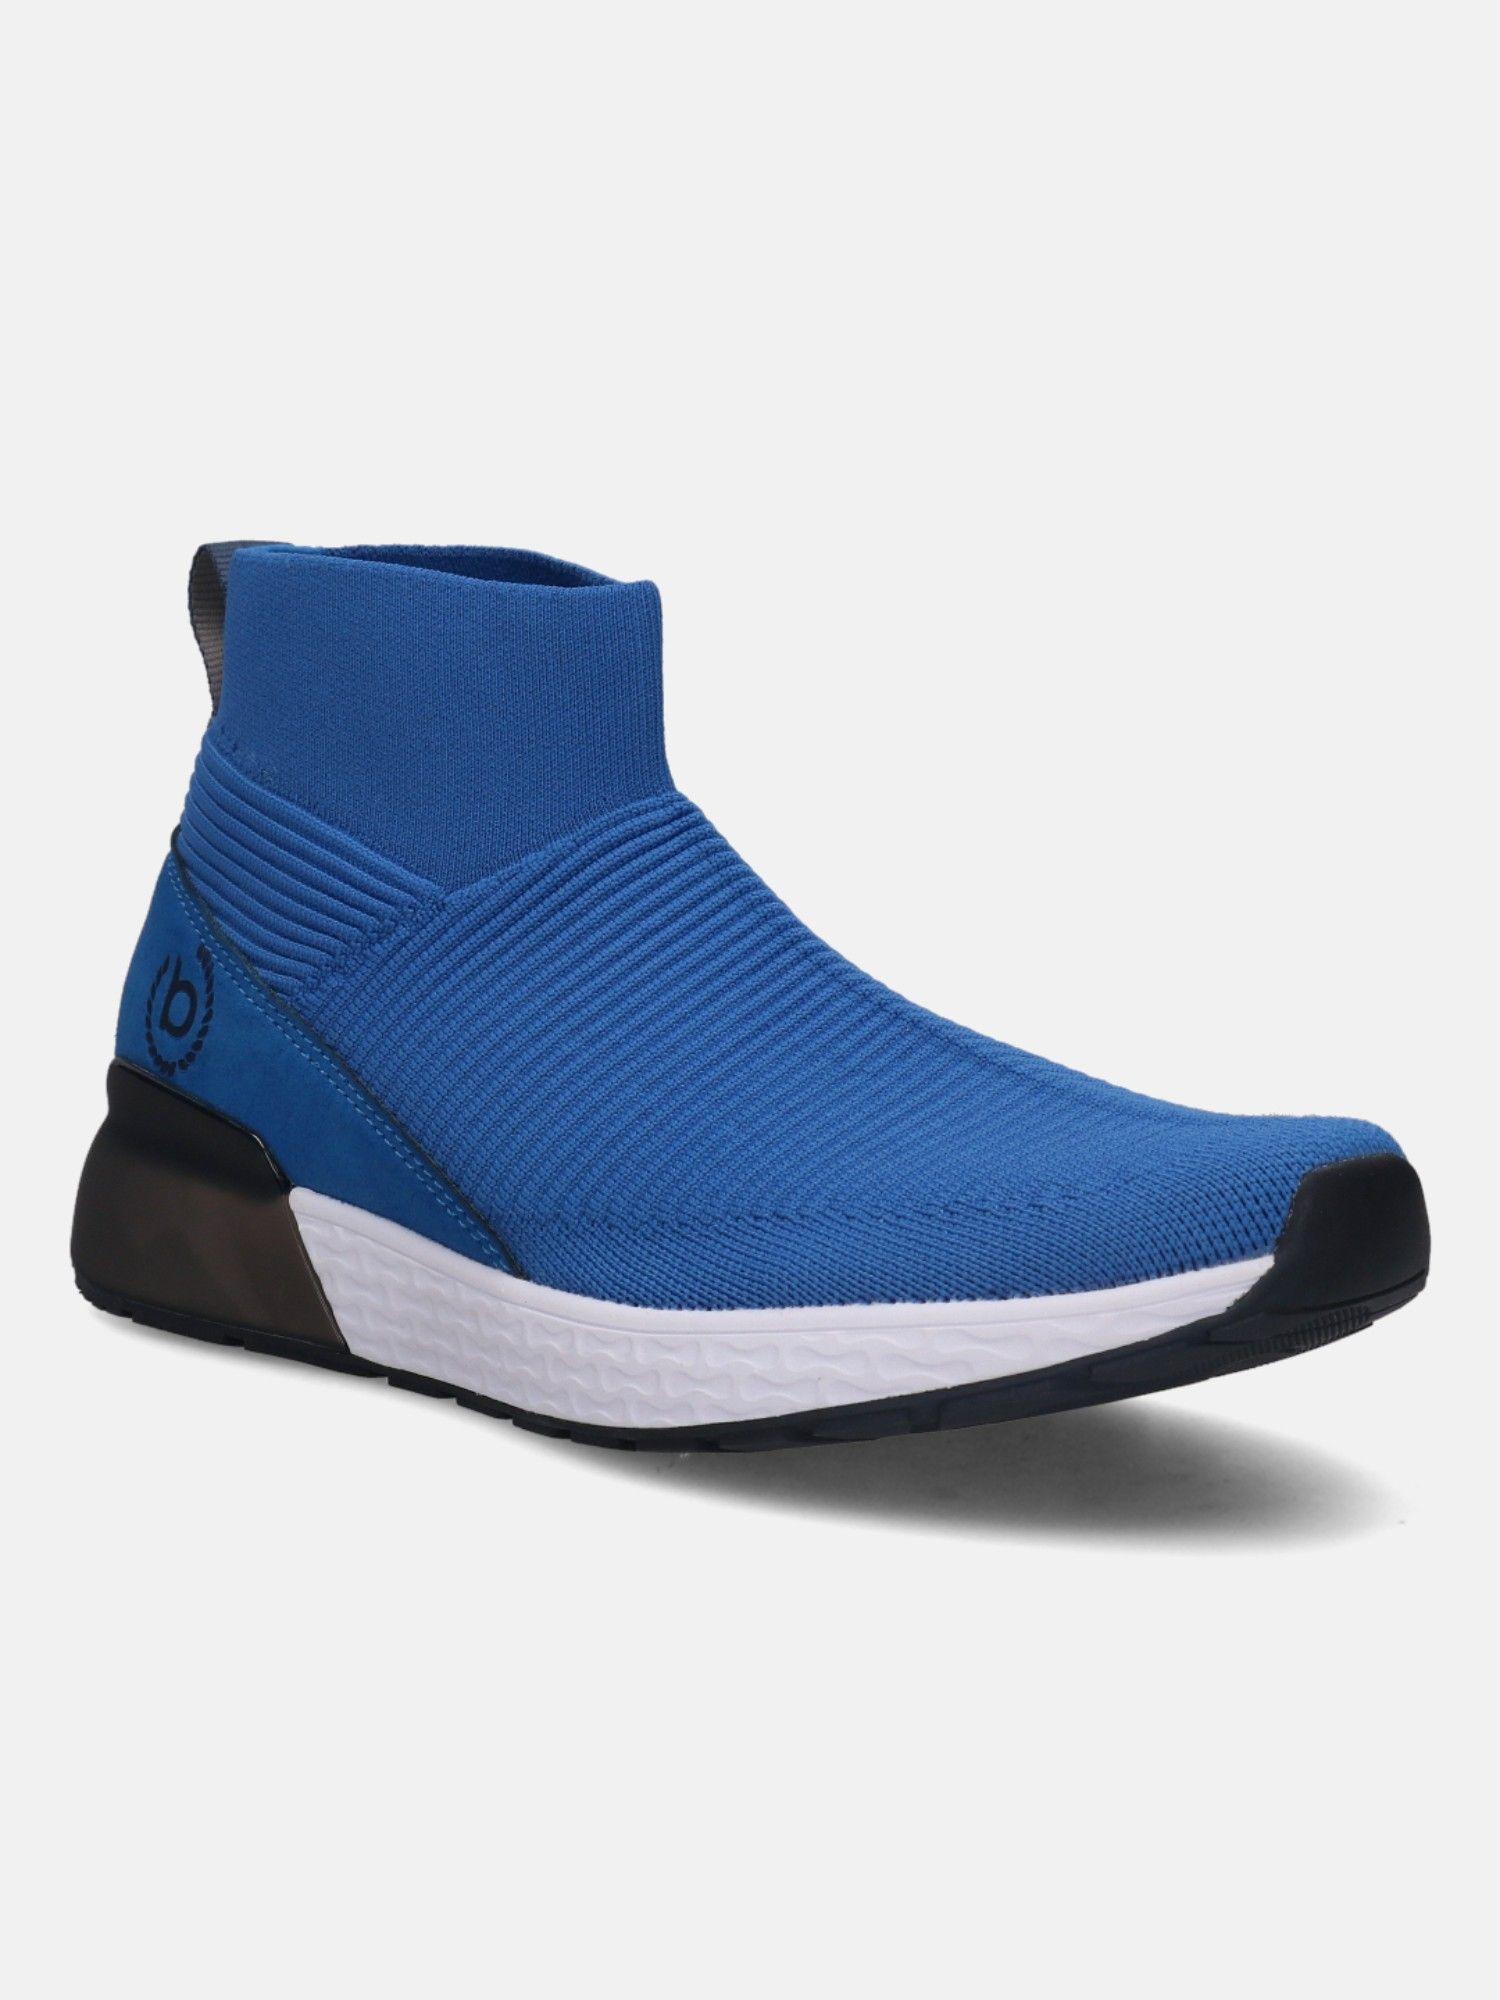 mens-blue-sports-shoes